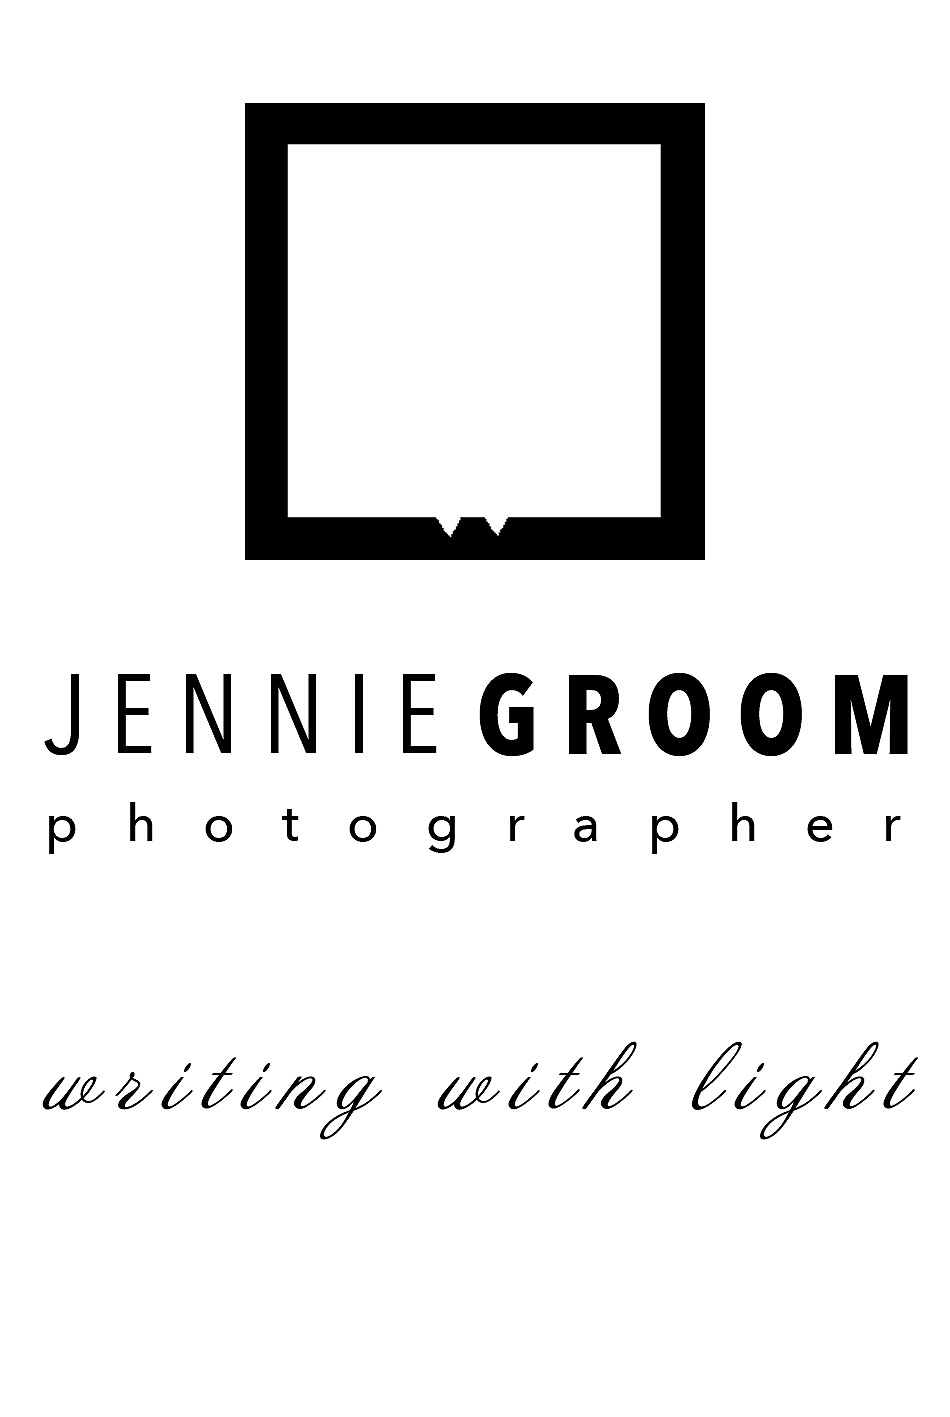 Jennie Groom Photographer